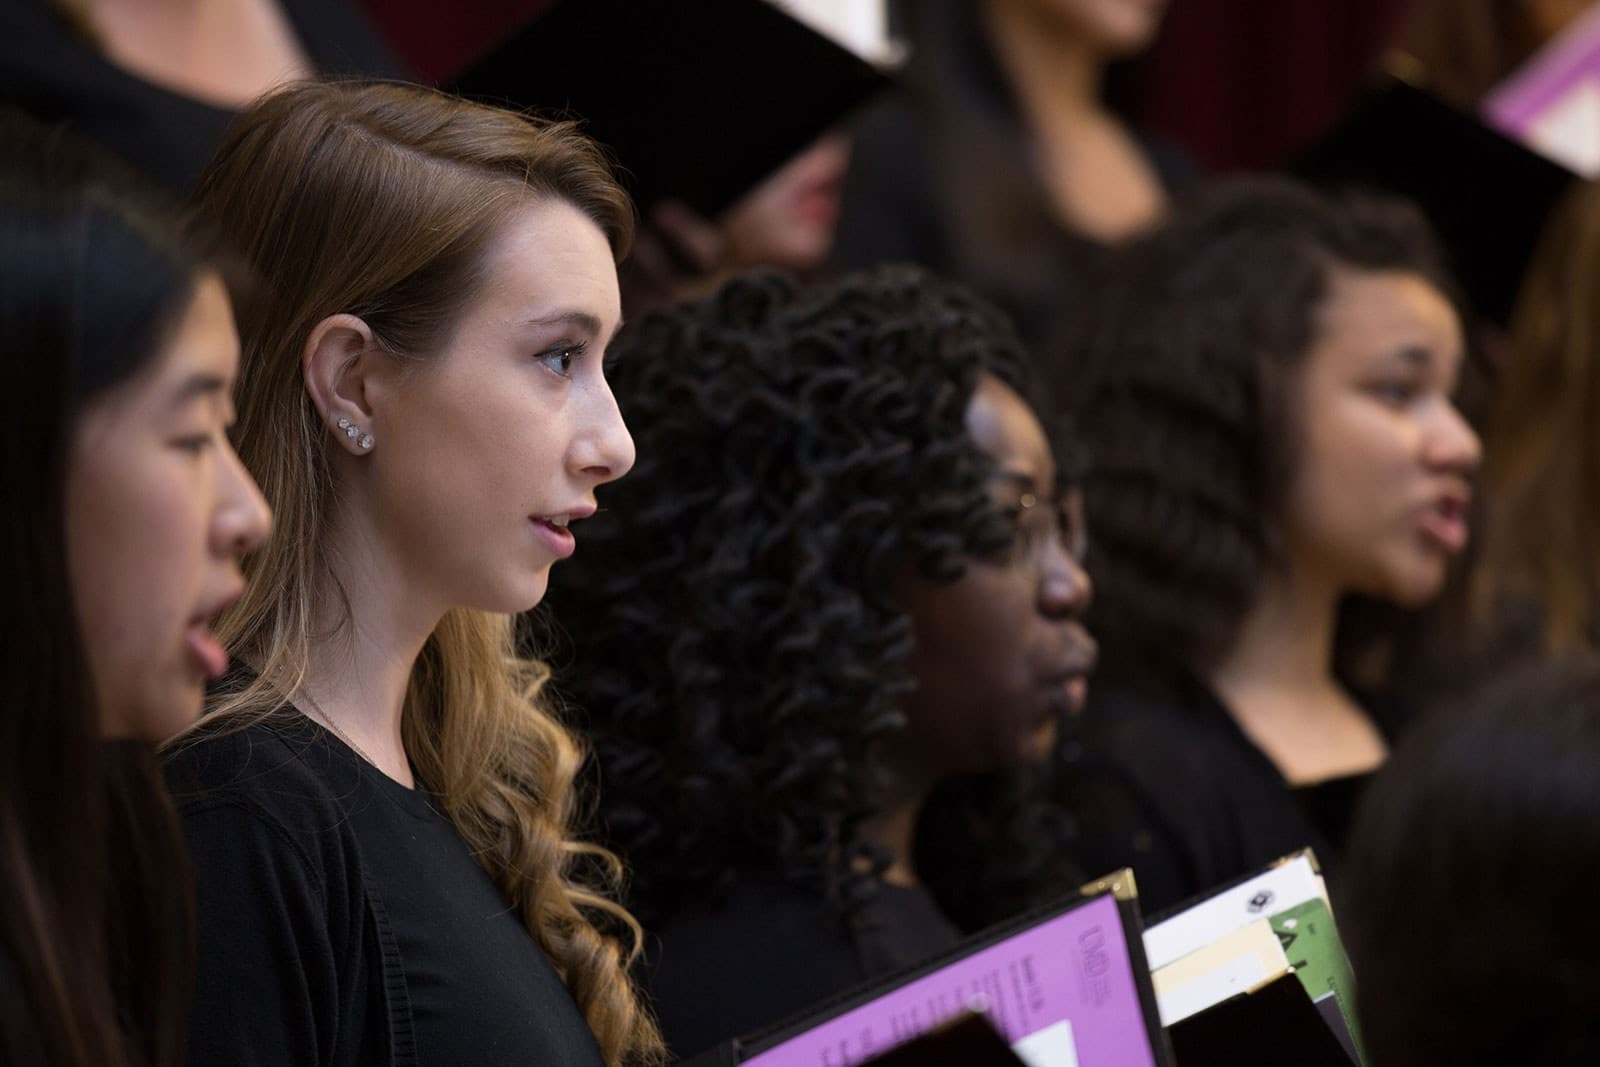 Choir students mid-performance.